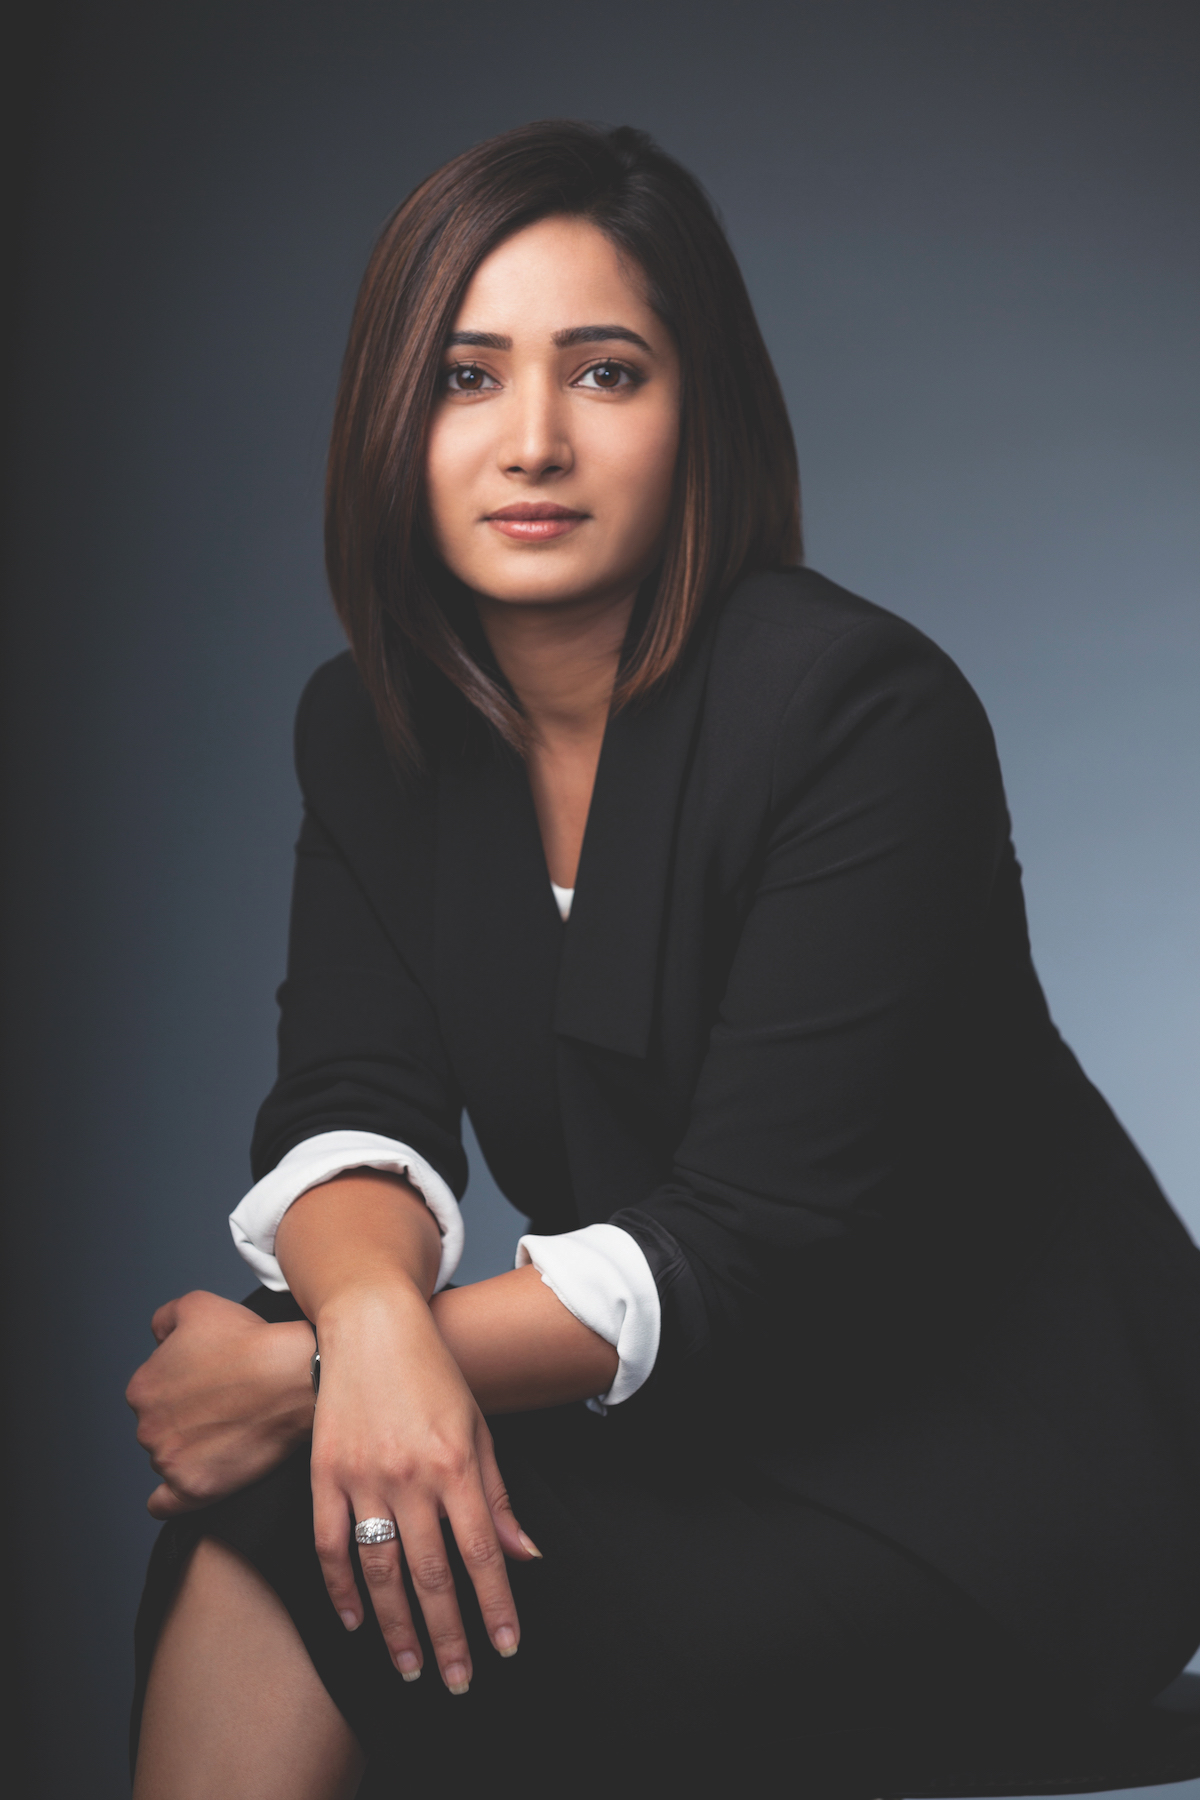 Nadia Chauhan, Managing Director of Parle Agro